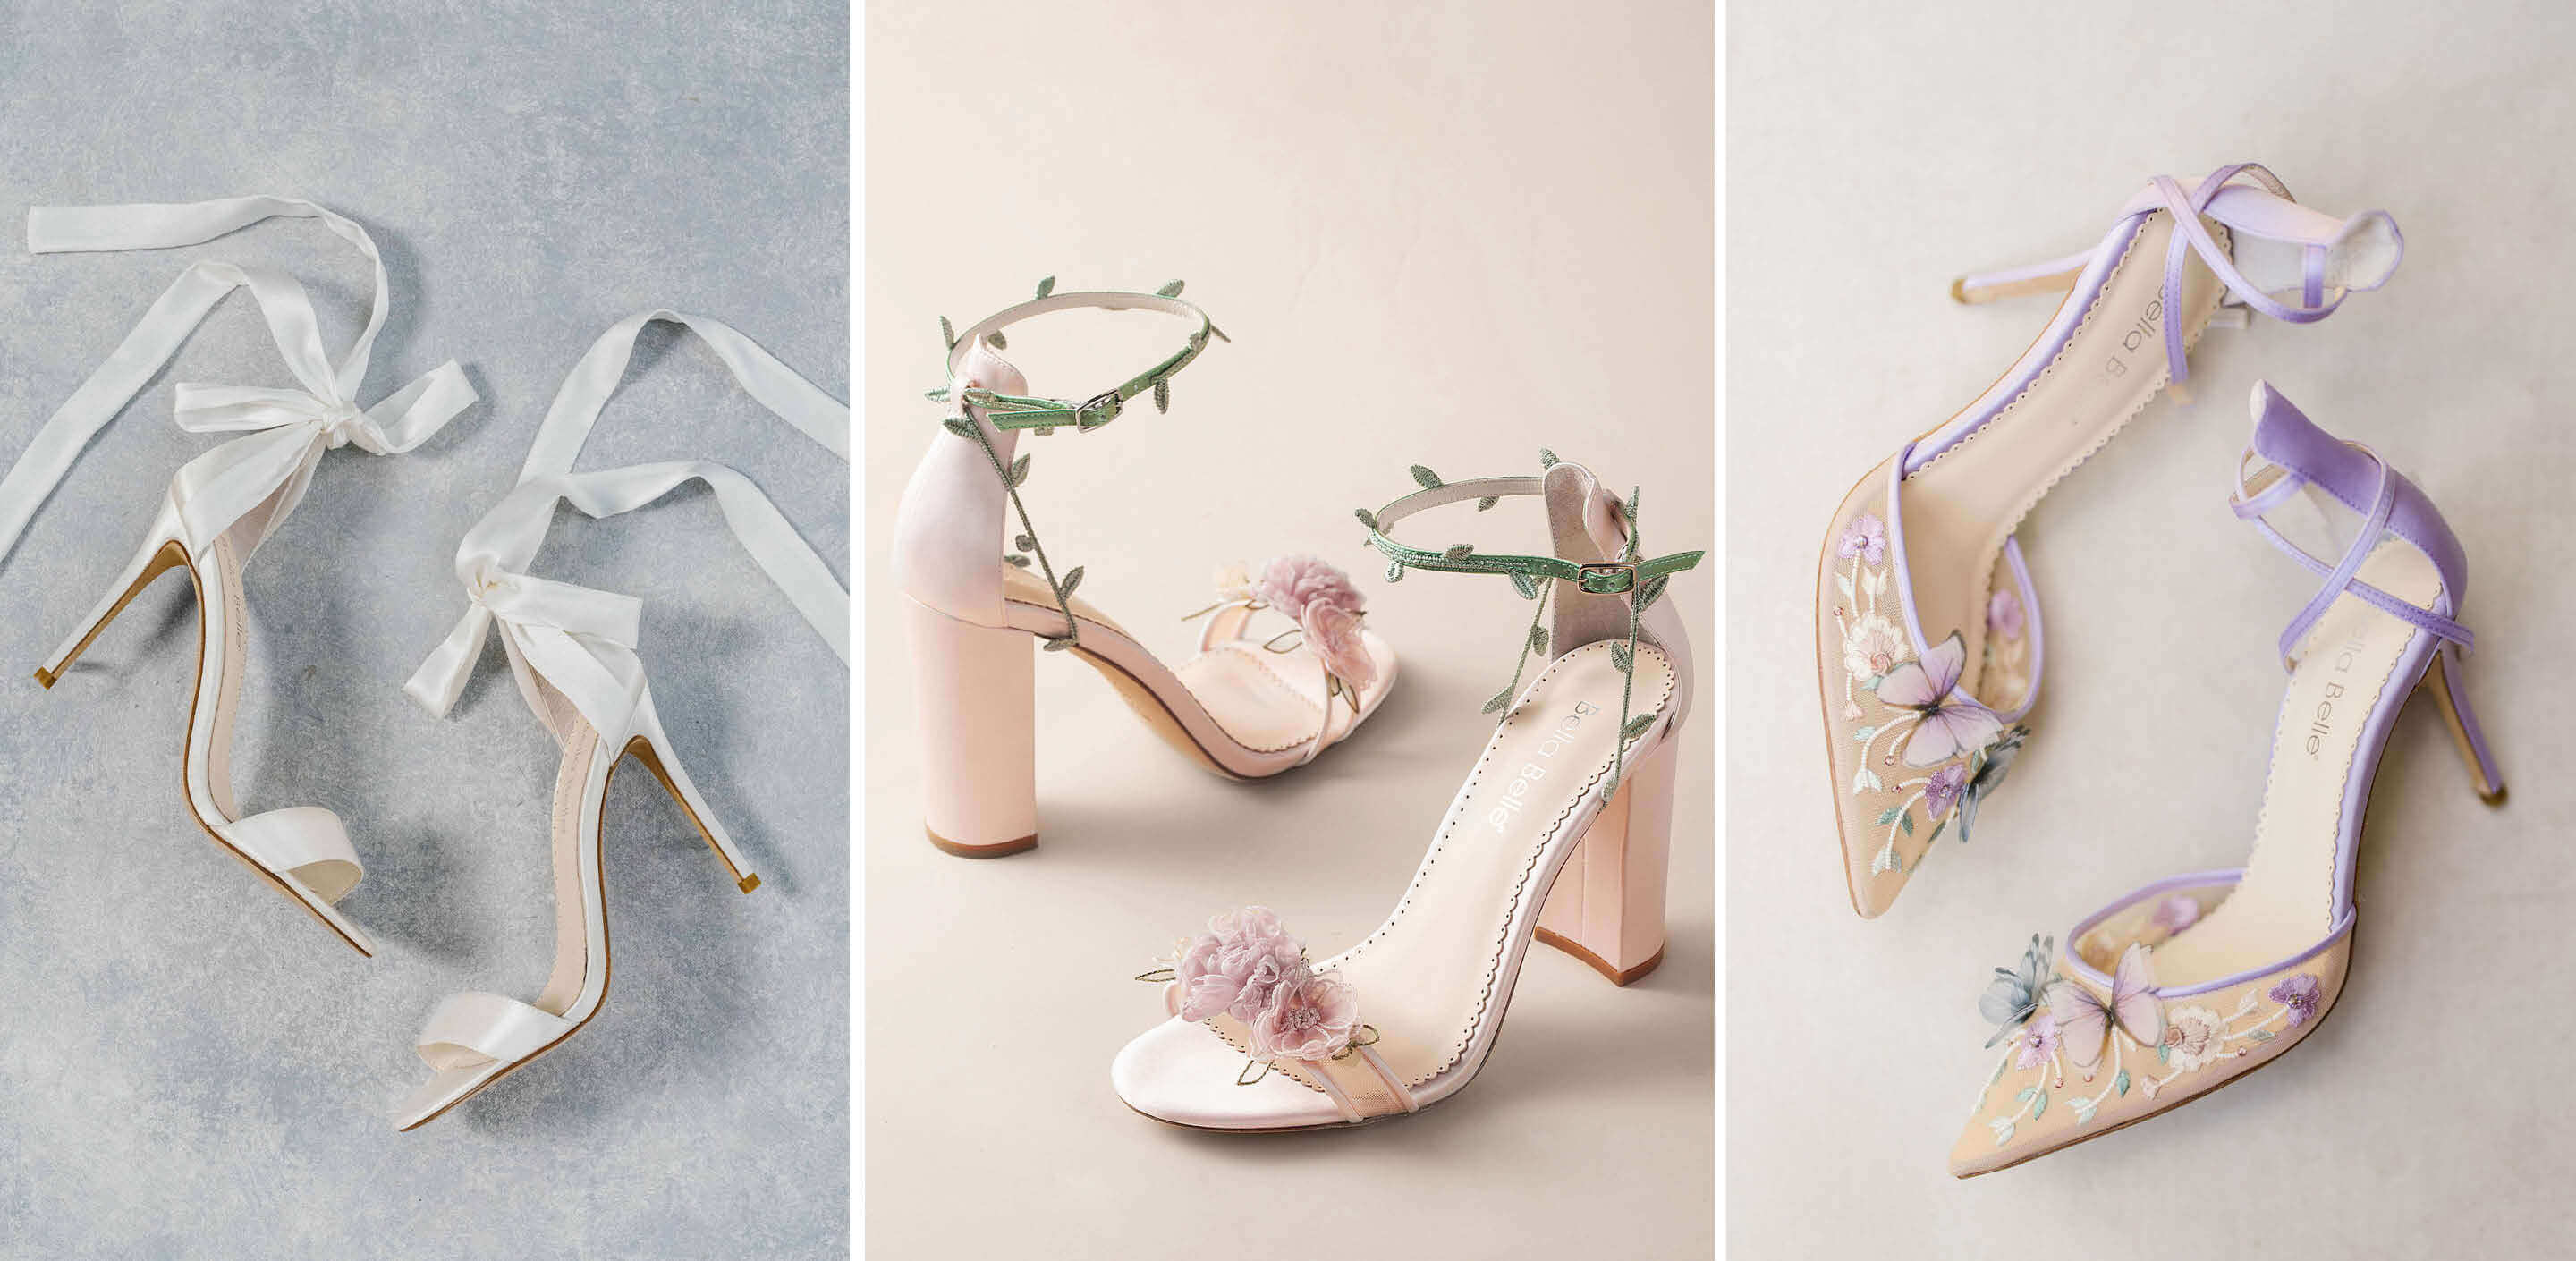 Wedding Dress Shoes Pearl Design Thick Heel Platform 